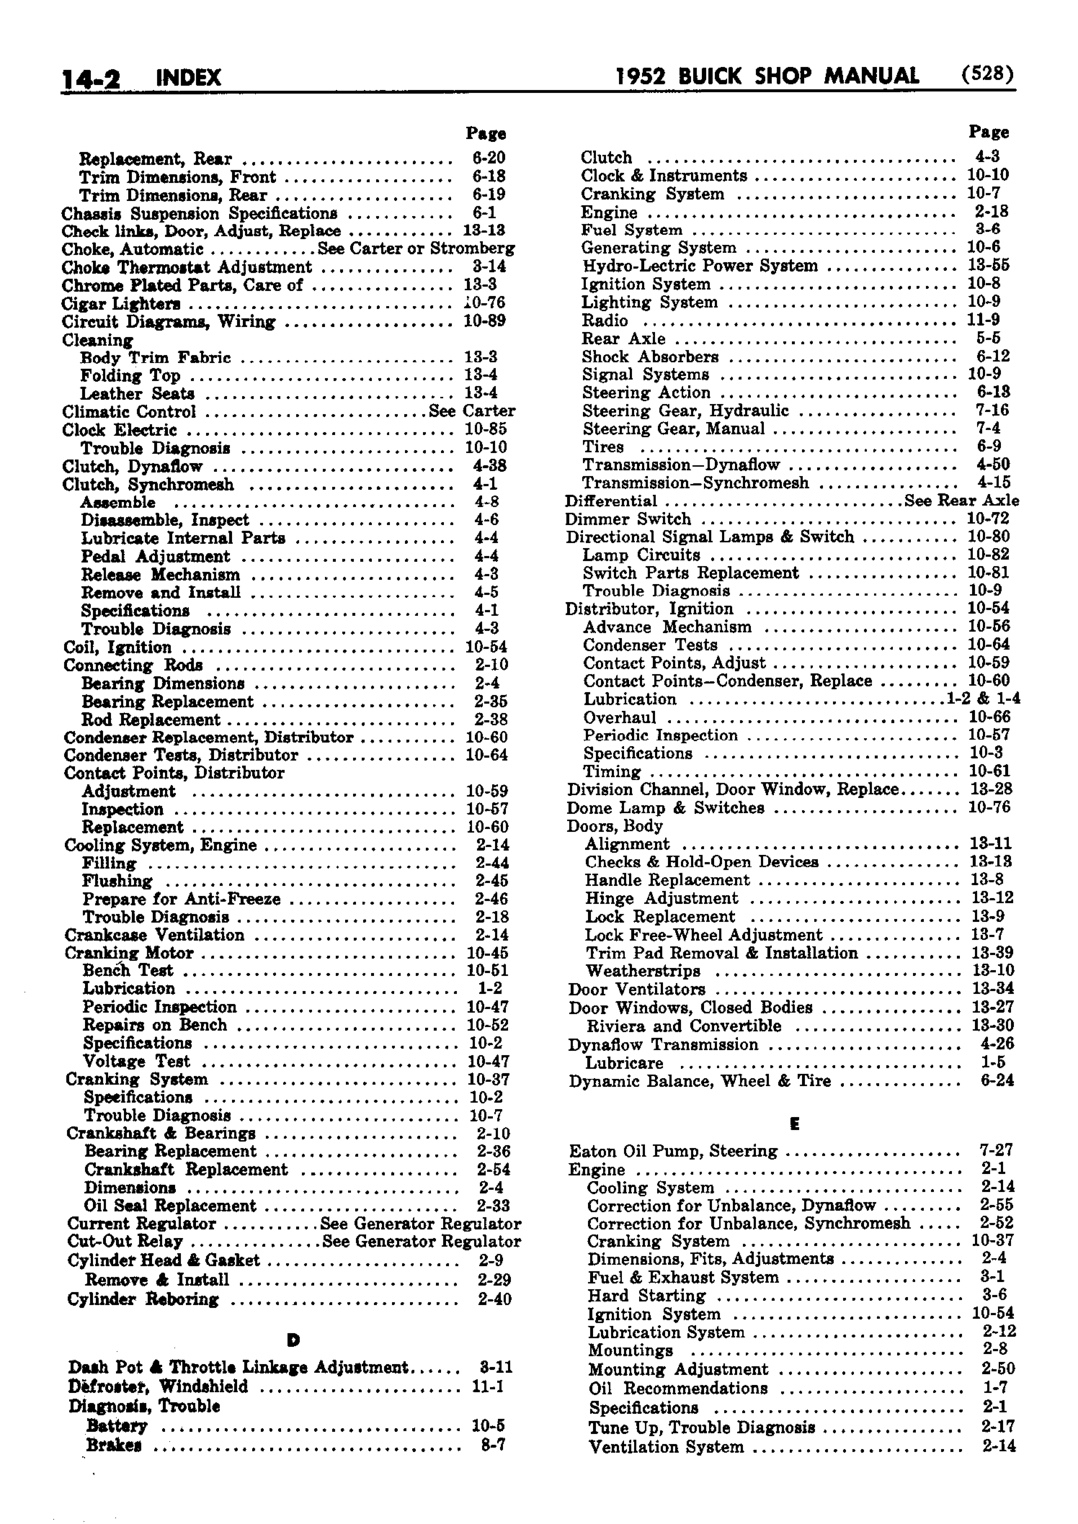 n_15 1952 Buick Shop Manual - Index-002-002.jpg